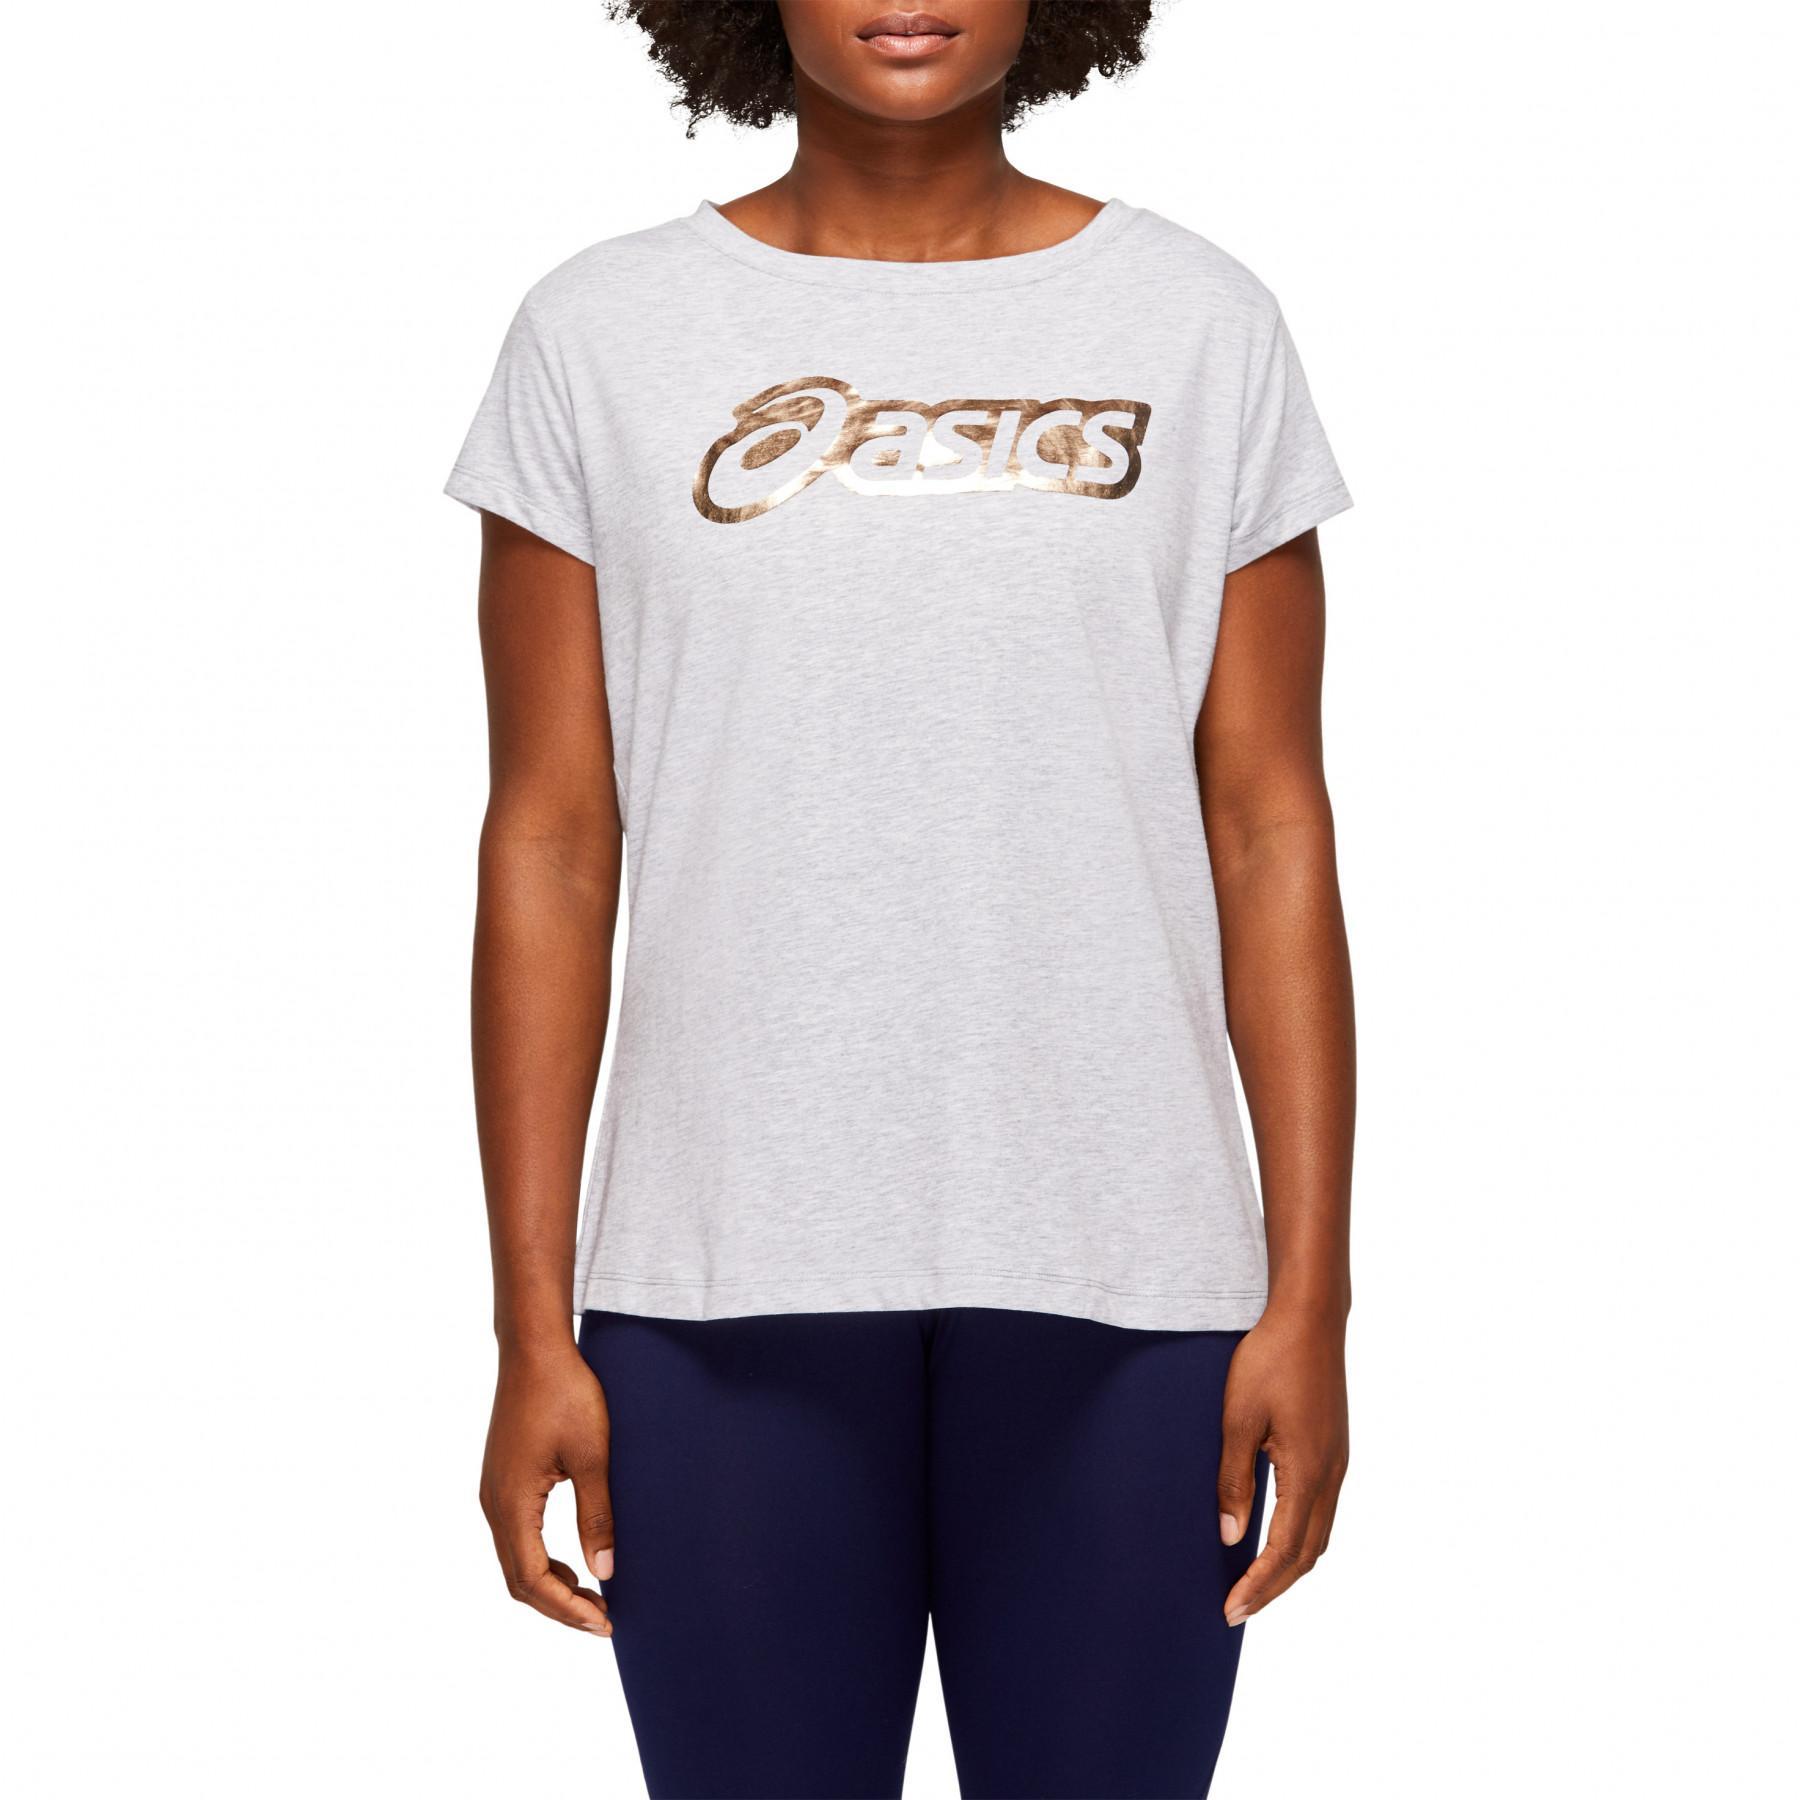 T-shirt mulher Asics Logo Graphic